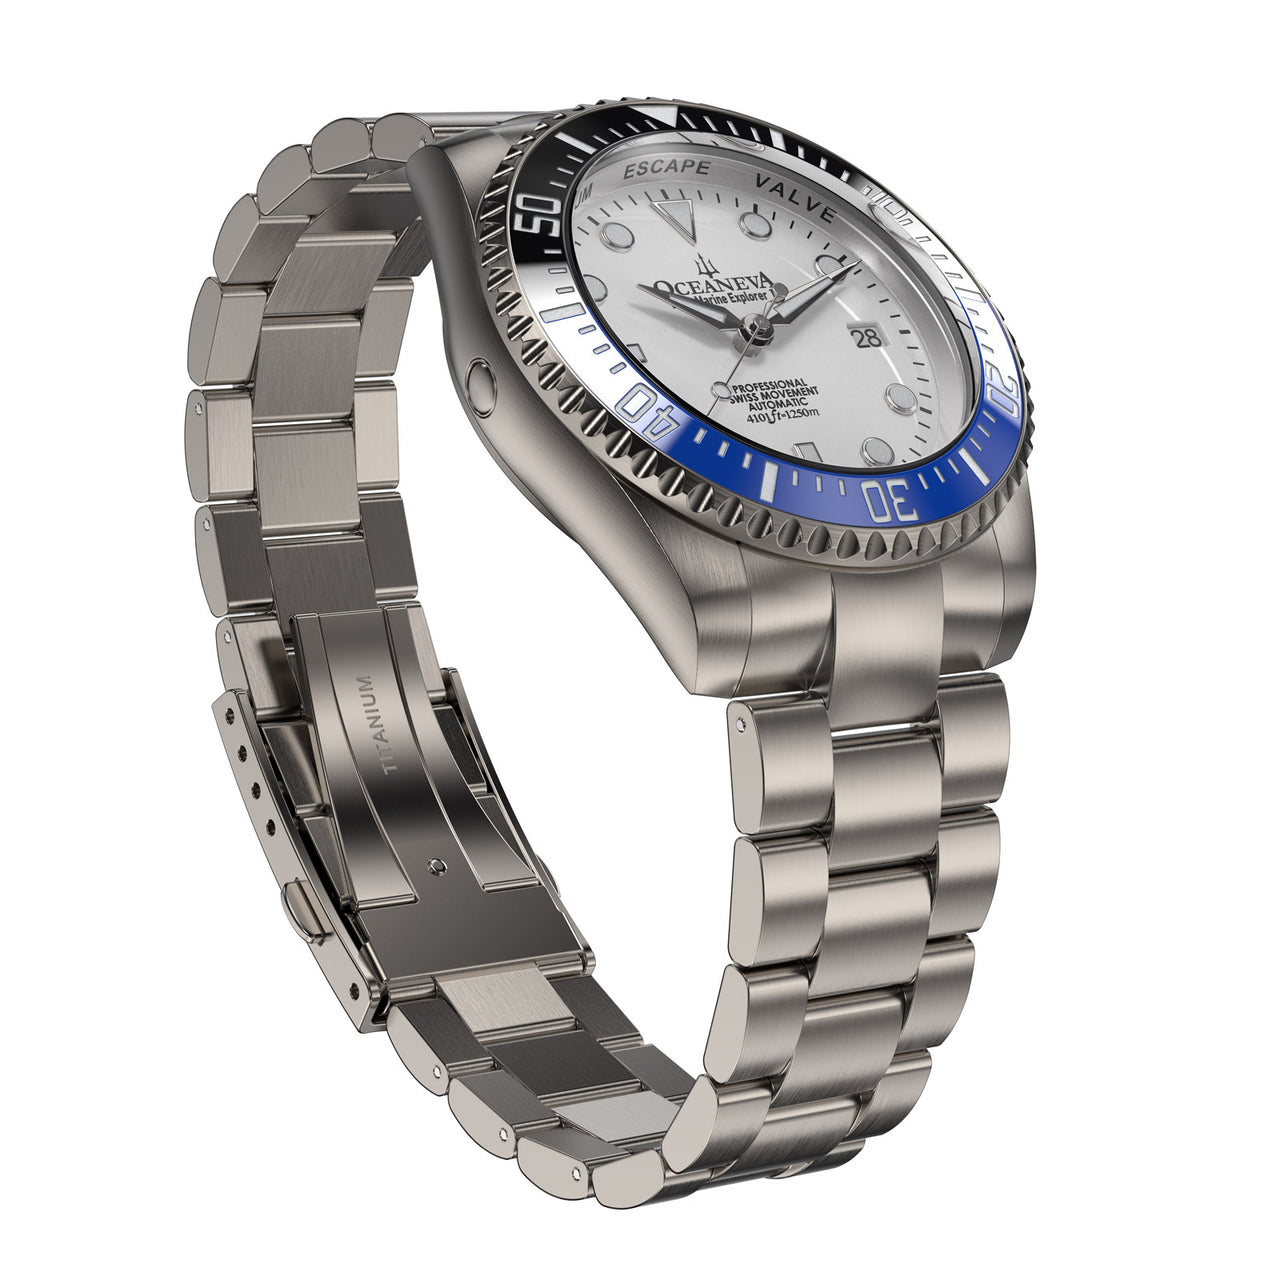 Oceaneva™ Men's Deep Marine Explorer II 1250M Titanium Watch White Dial